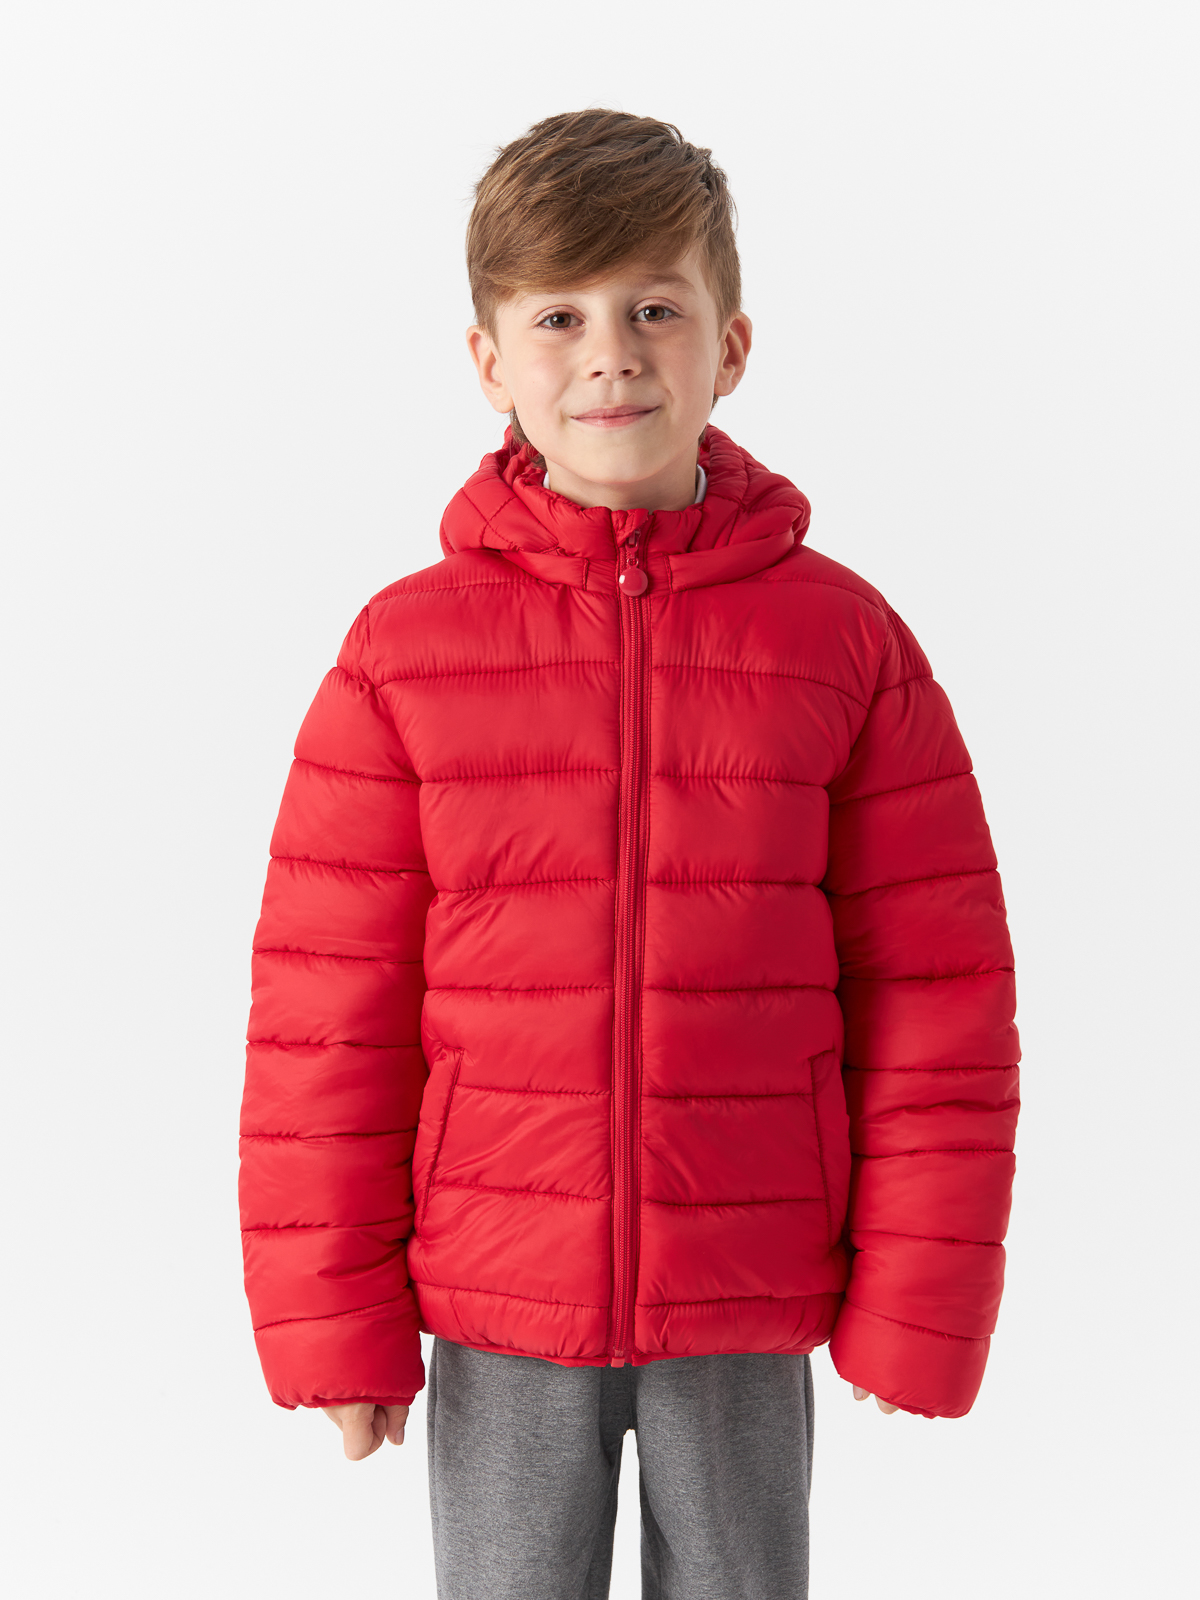 Куртка Mcstyles для мальчиков, размер 116, SMM10, красная